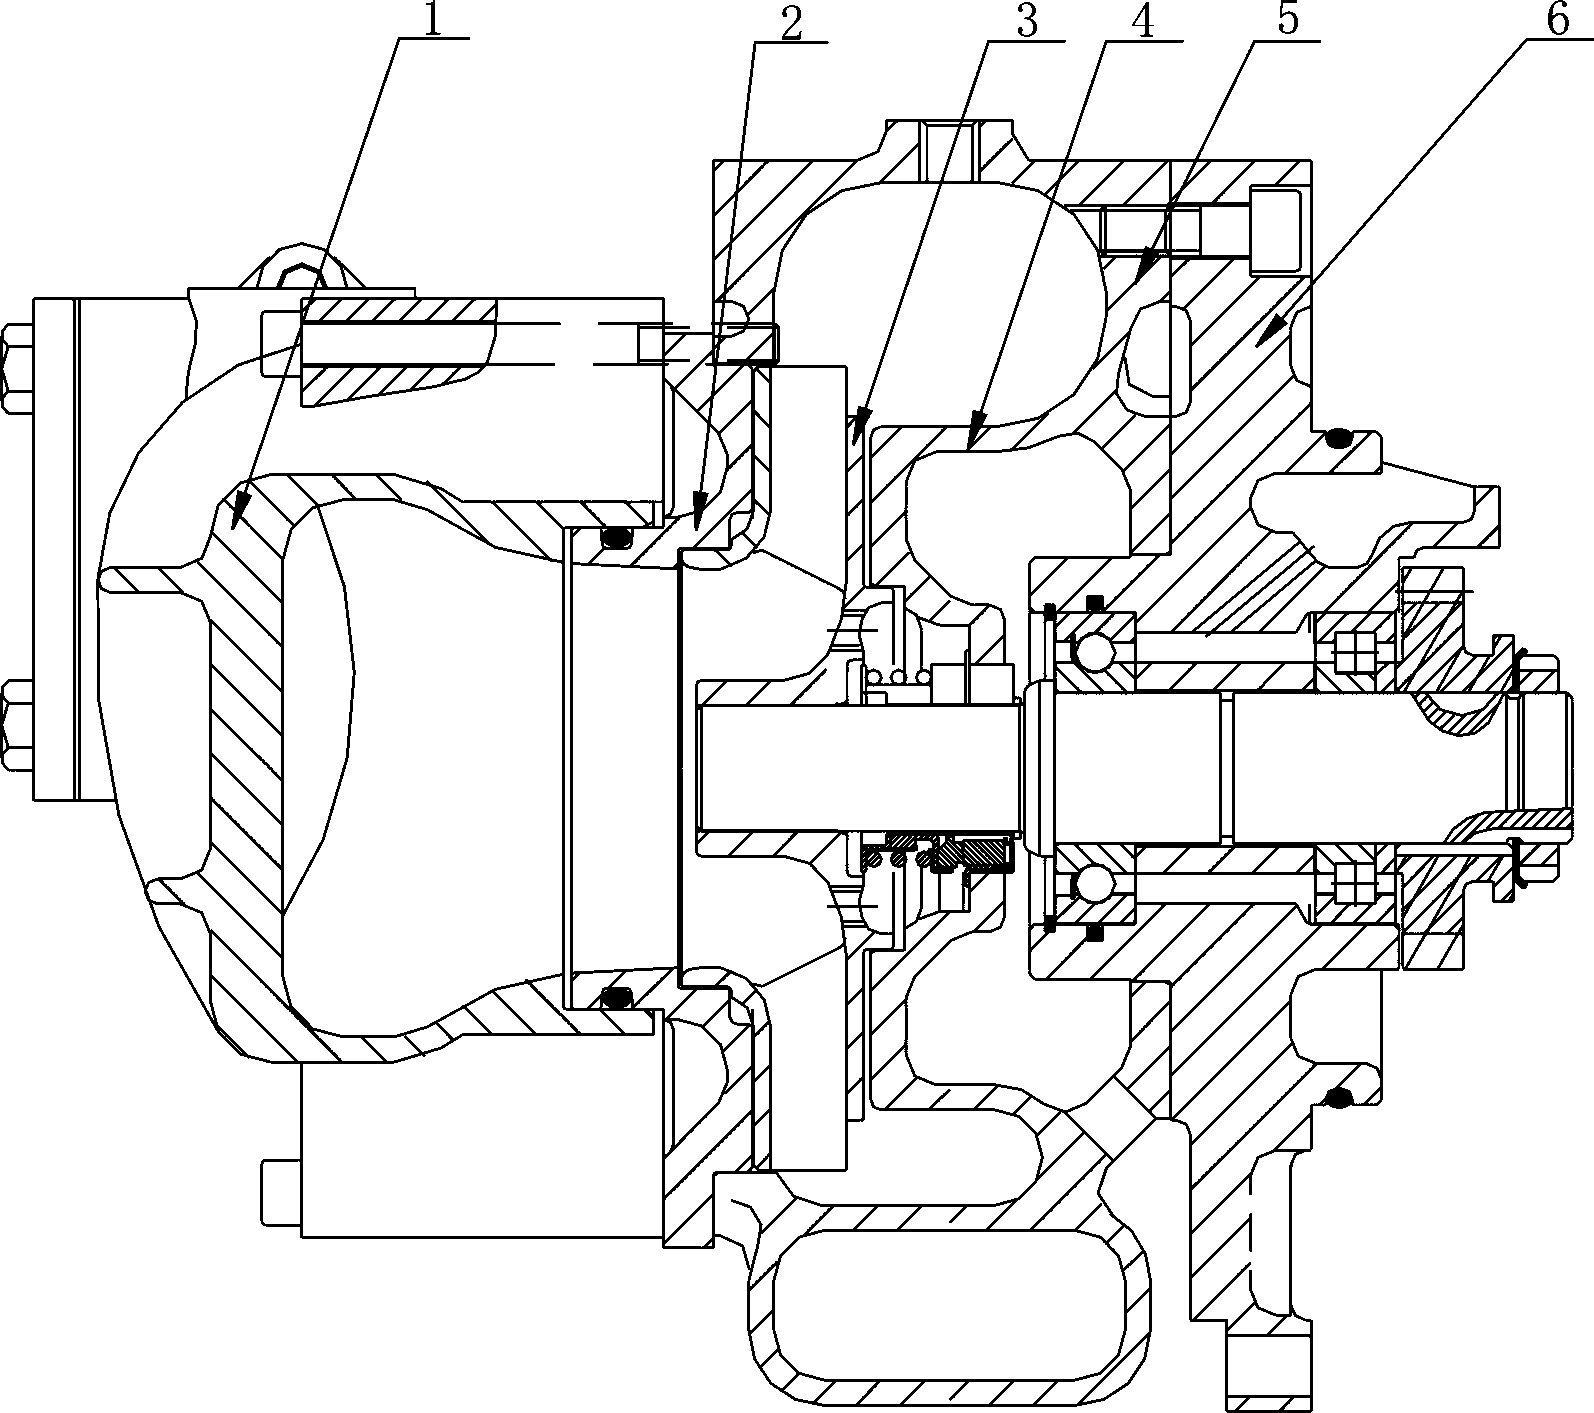 Impeller, water pump and design method of water pump